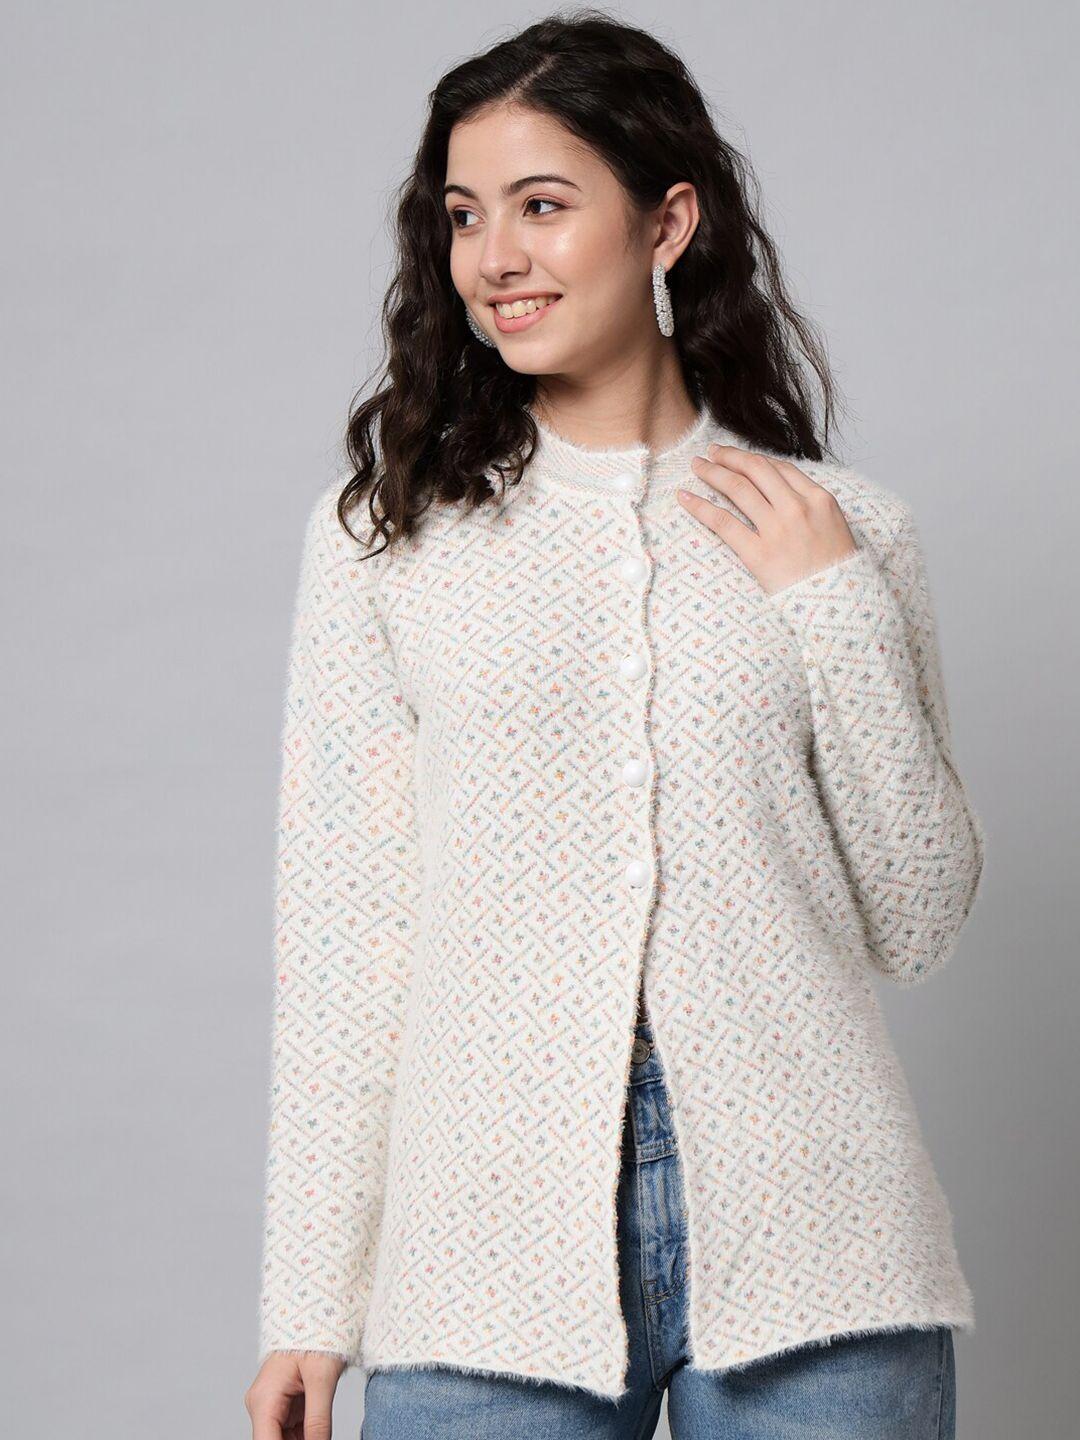 ewools geometric printed woolen cardigan sweater